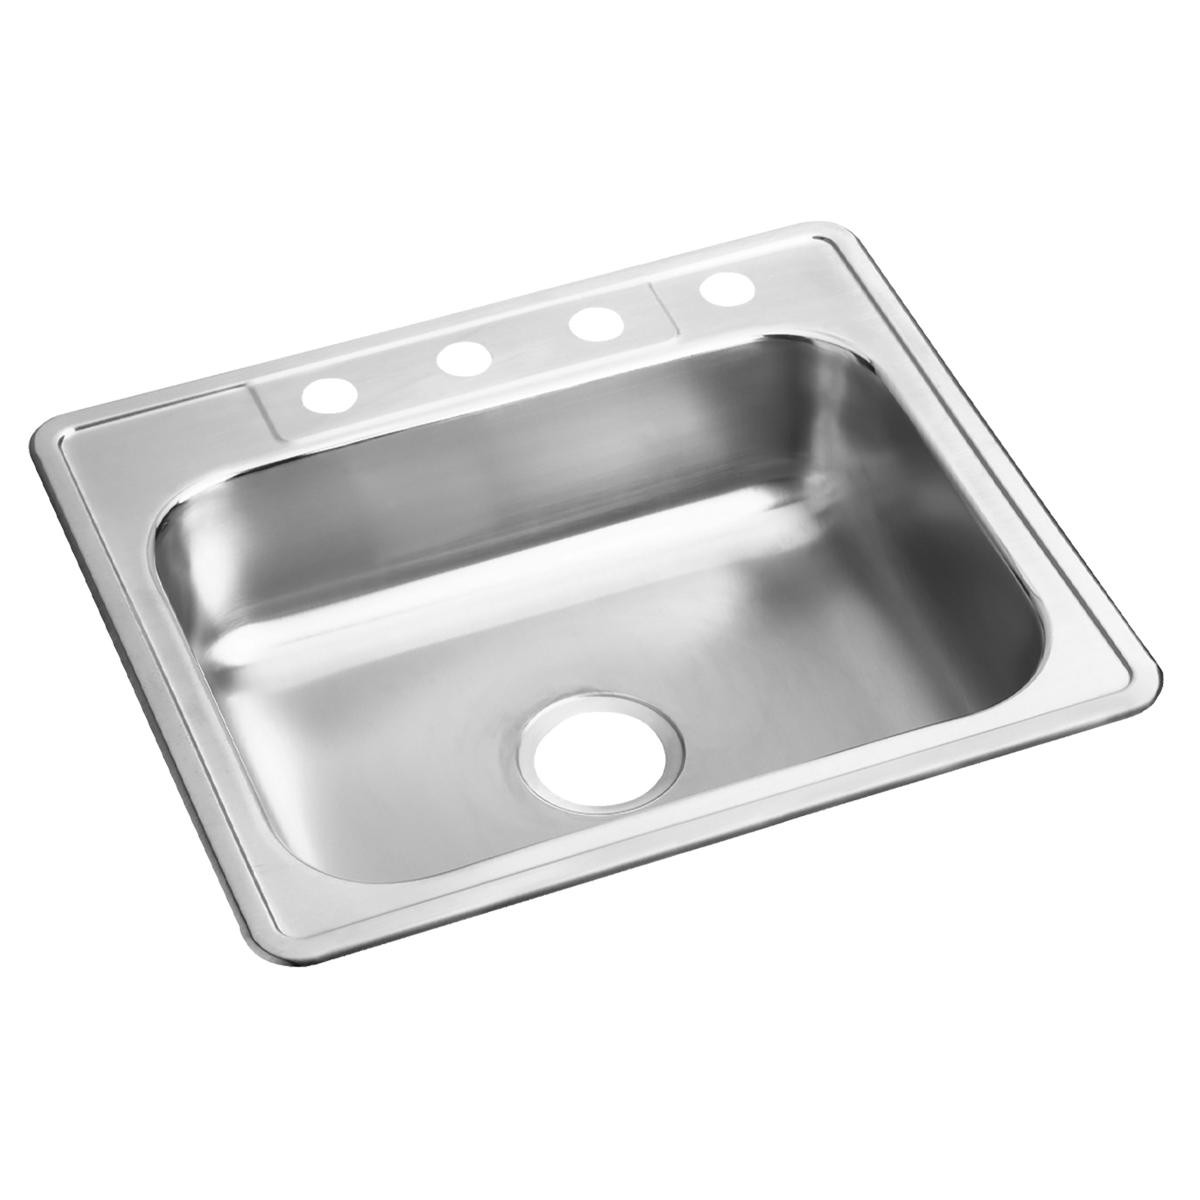 Dayton D125214: Stainless Steel 25" x 21-1/4" x 6-9/16" Single Bowl Drop-in Sink